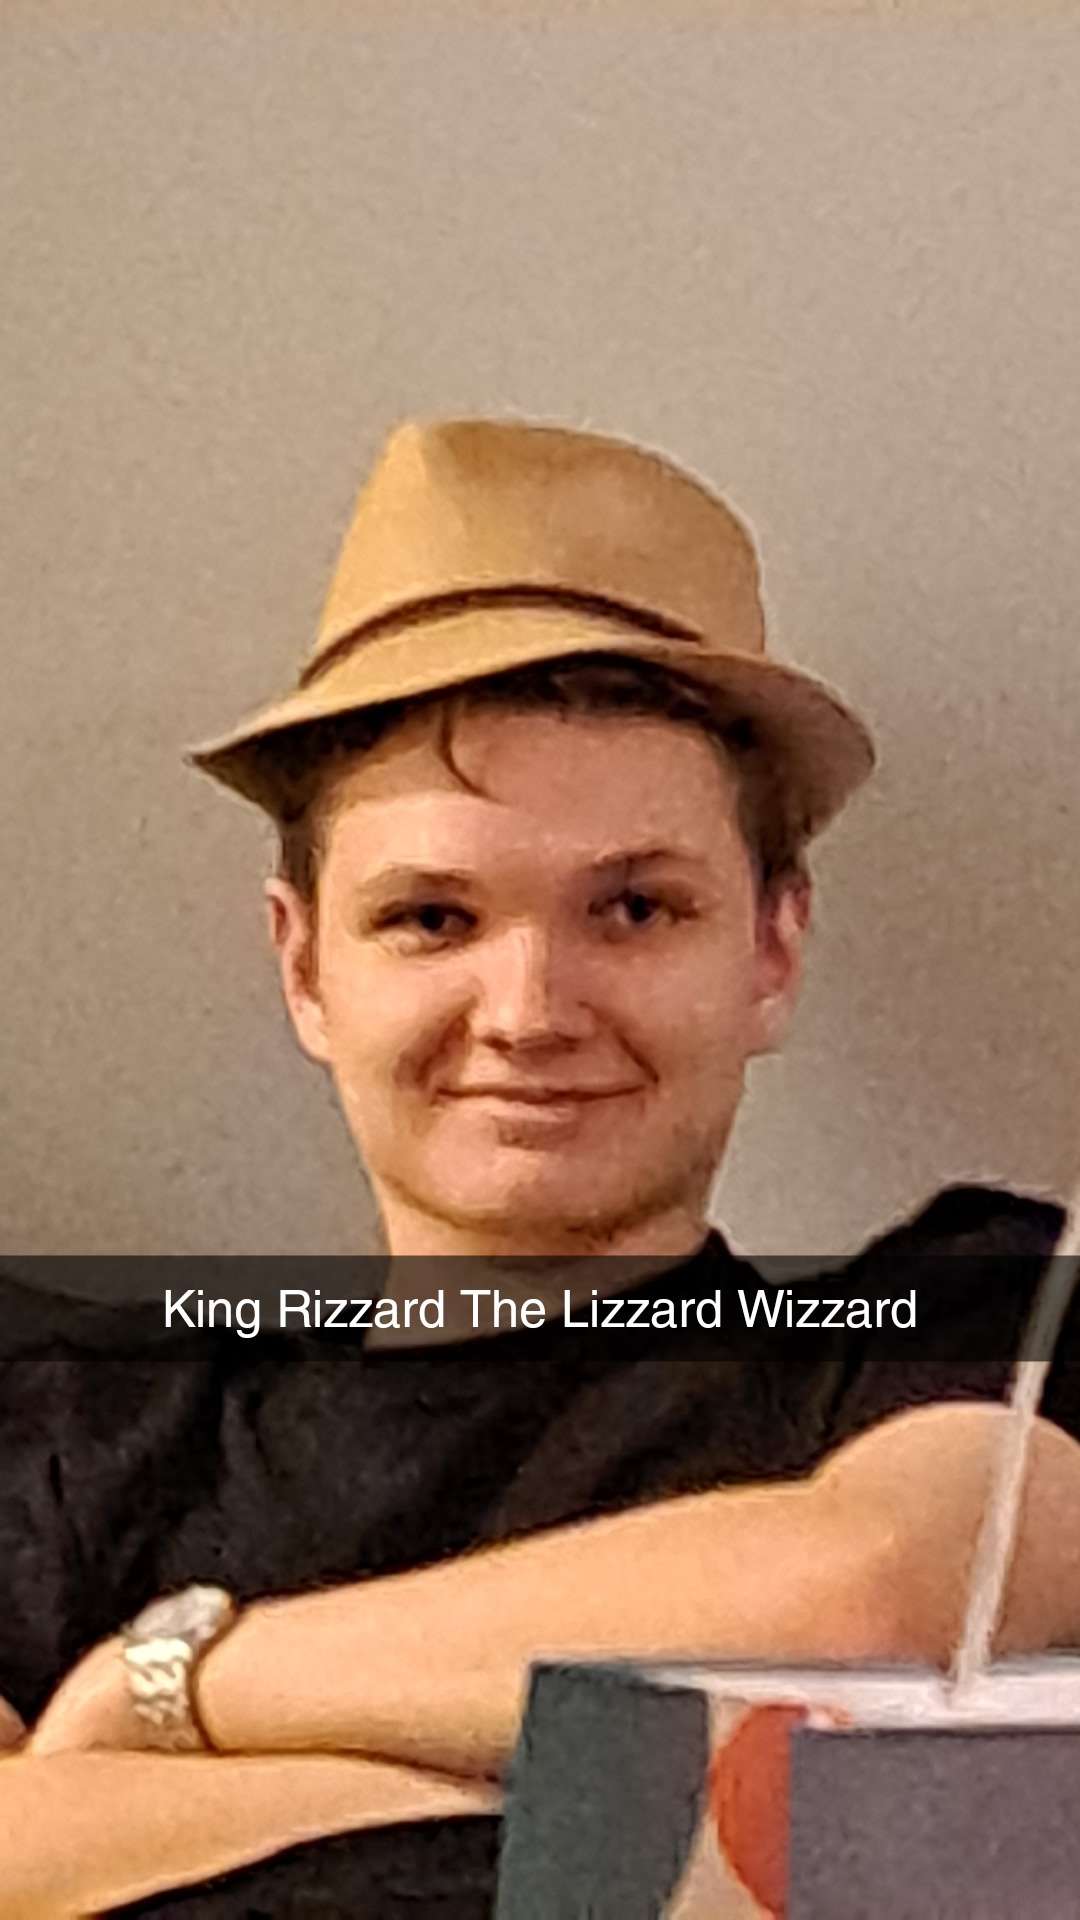 King Rizzard